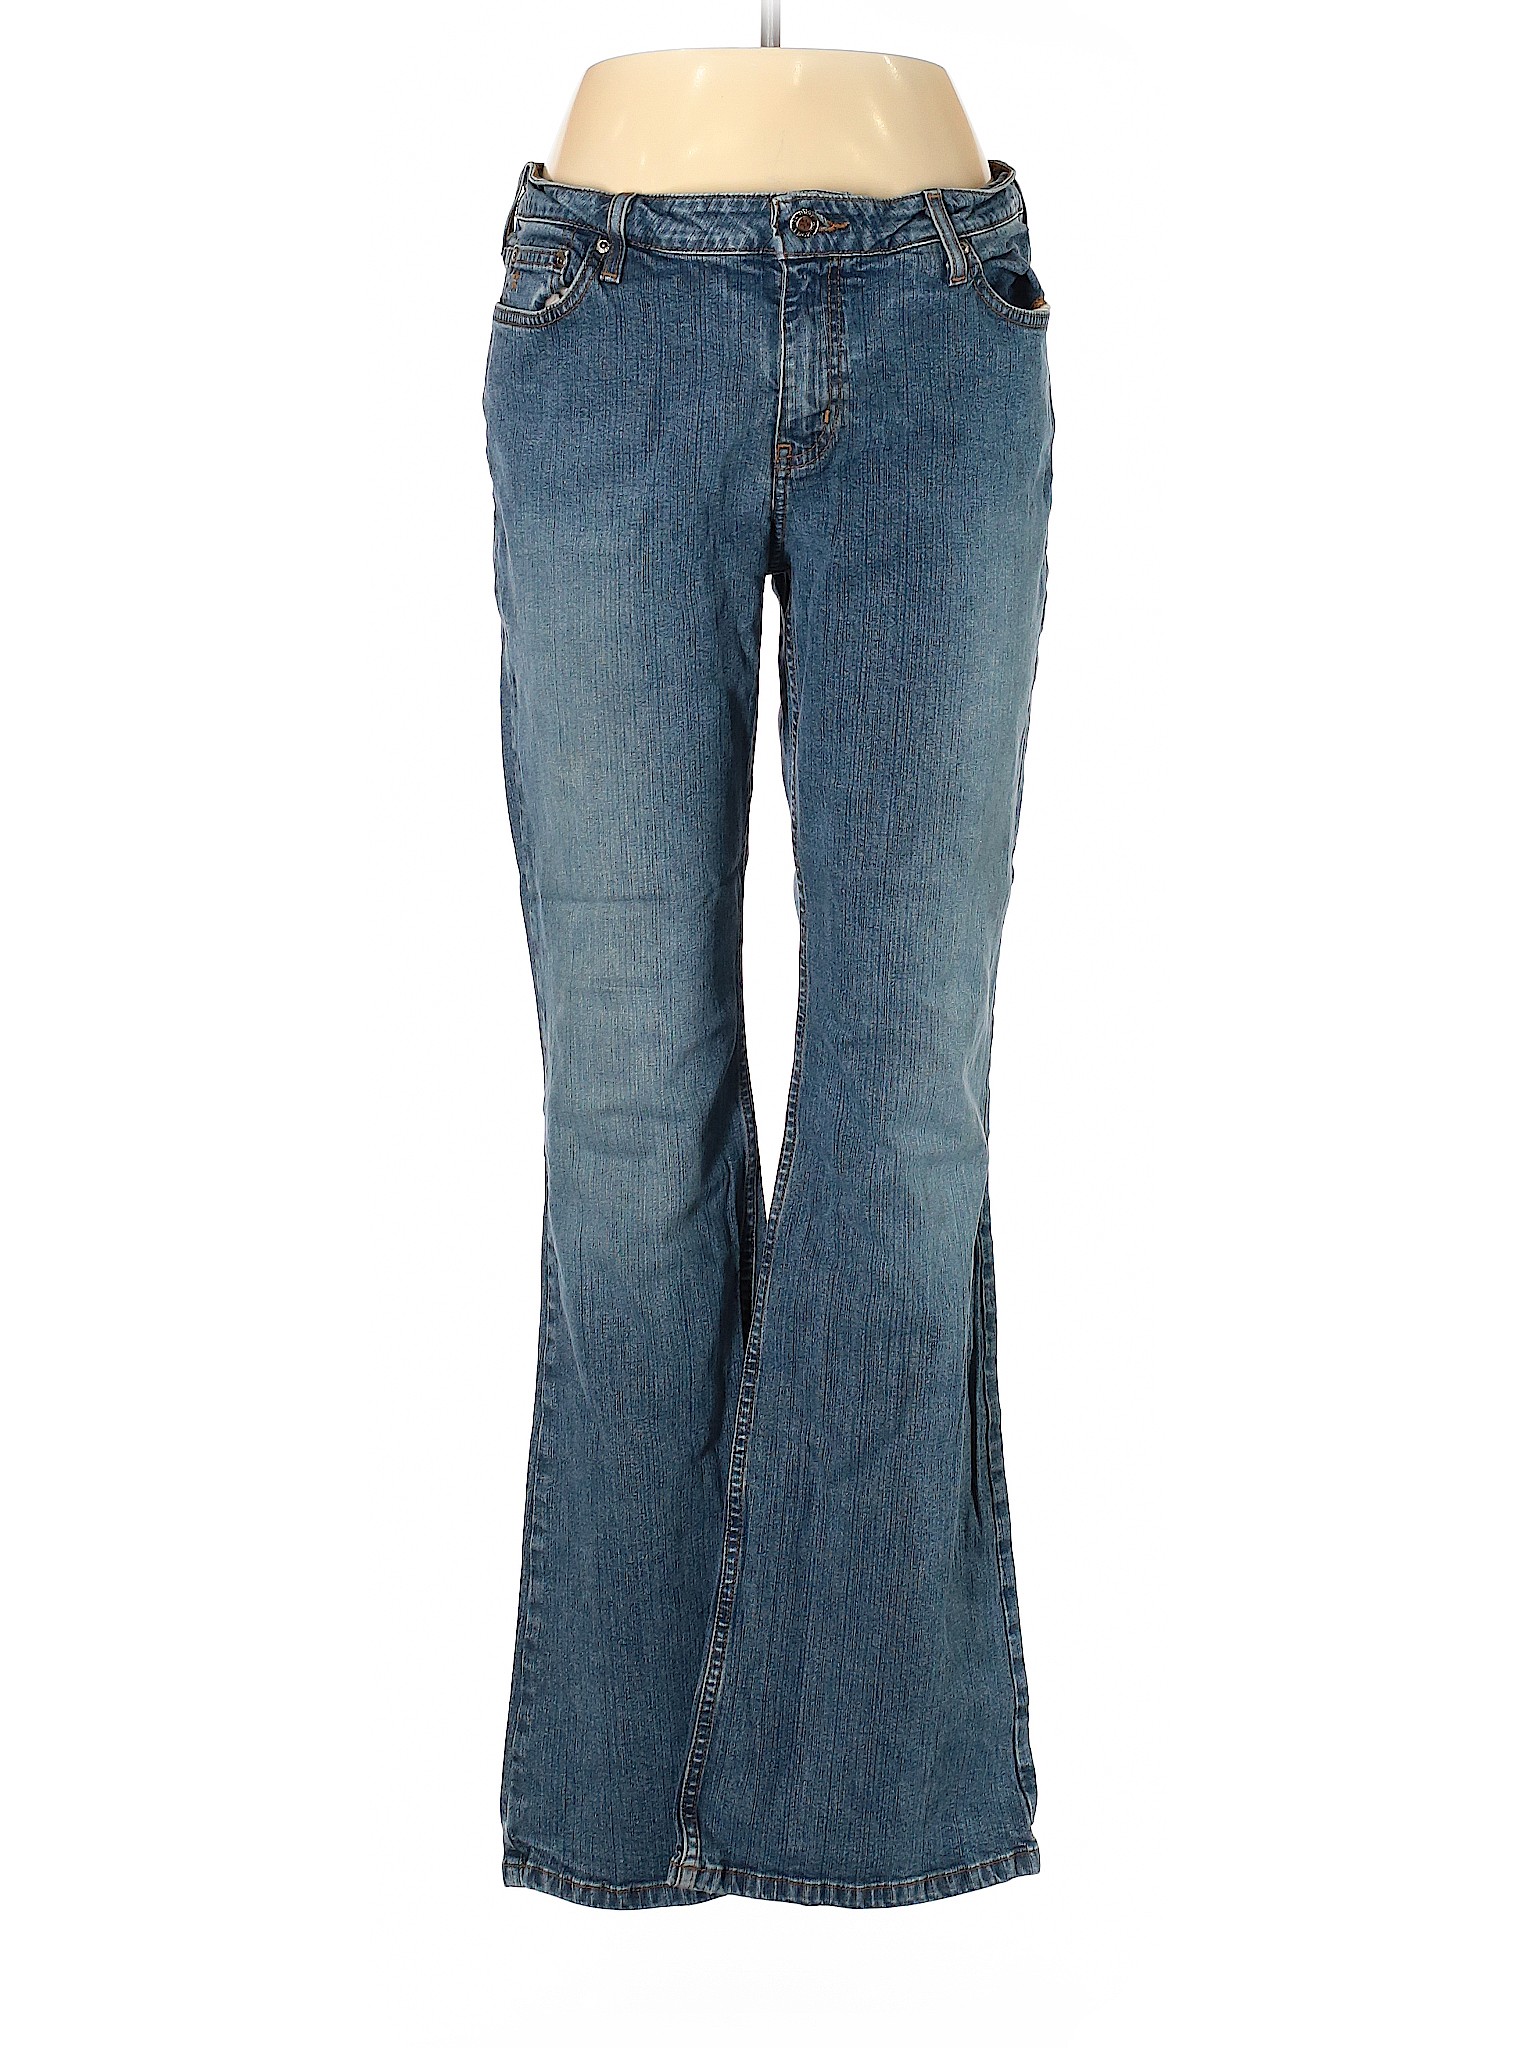 Arizona Jean Company Women Blue Jeans 13 | eBay